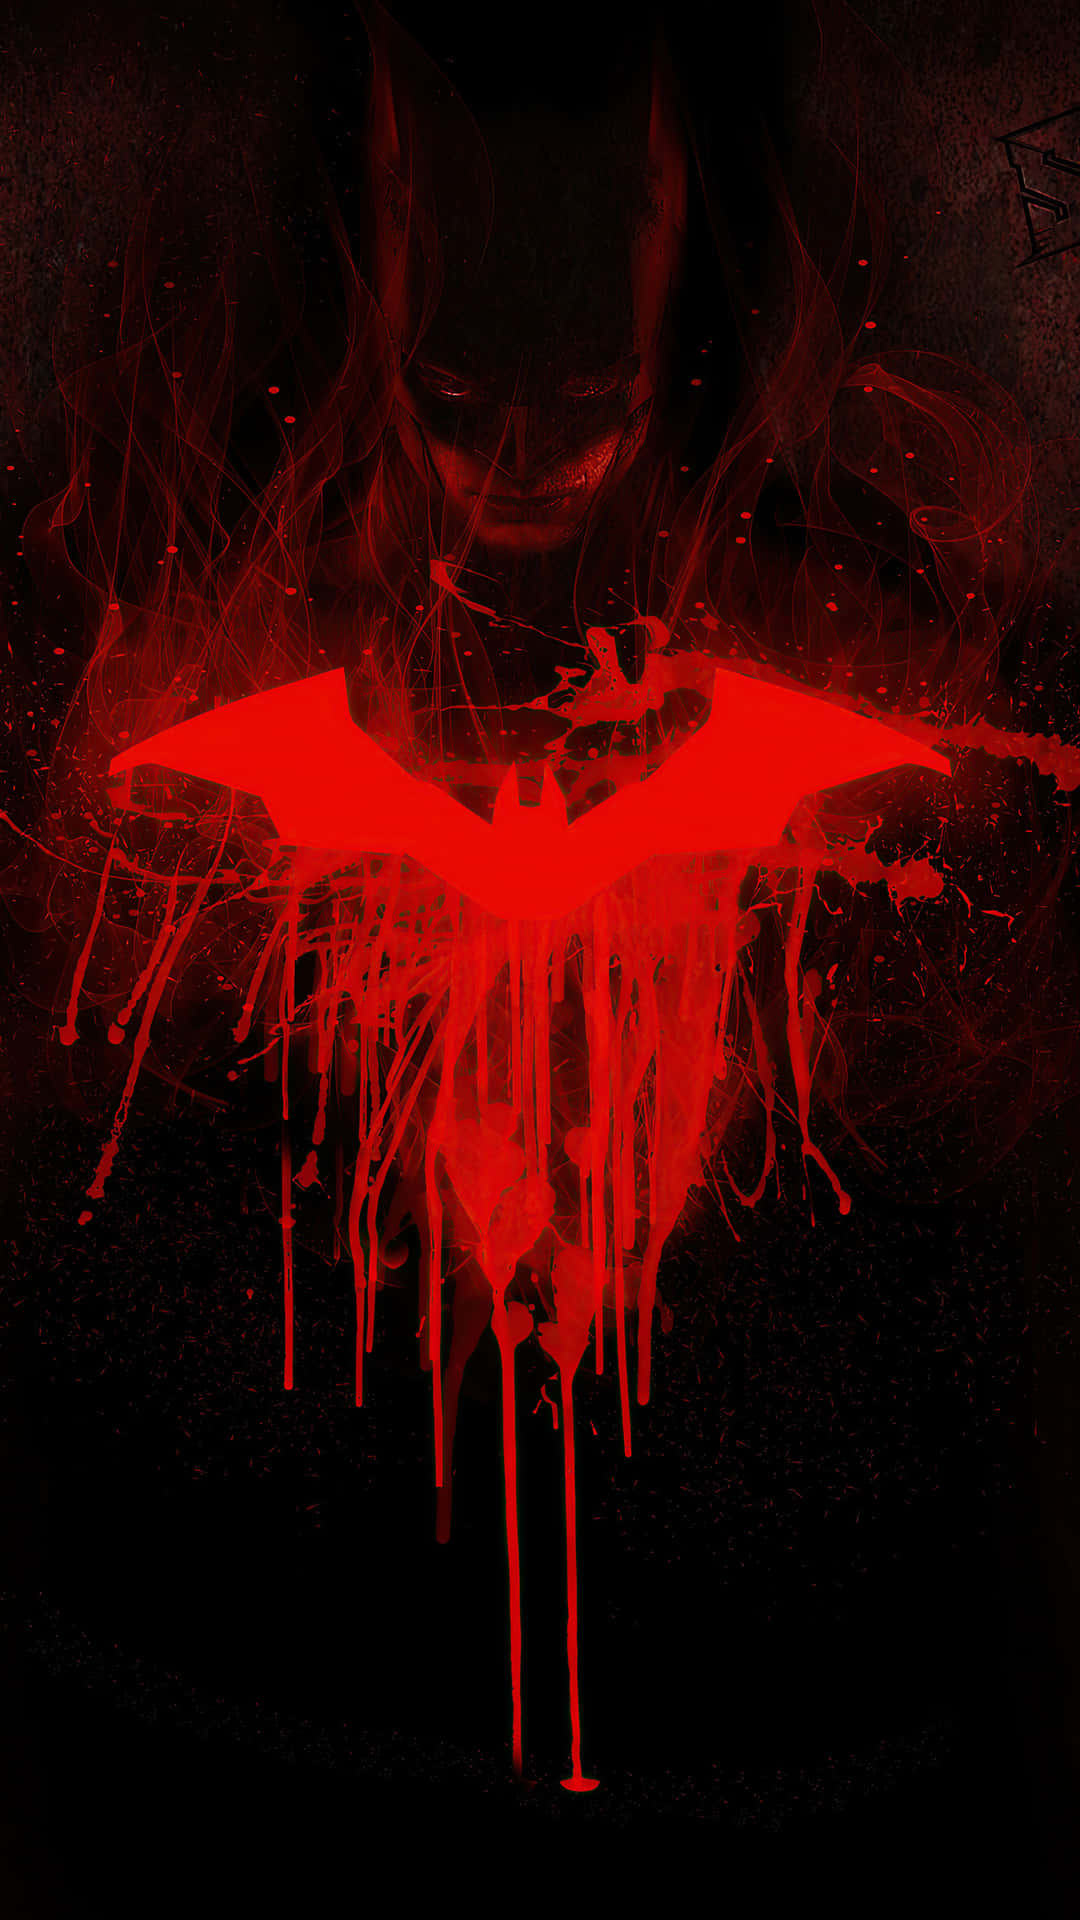 Bright Red Batman Logo Wallpaper